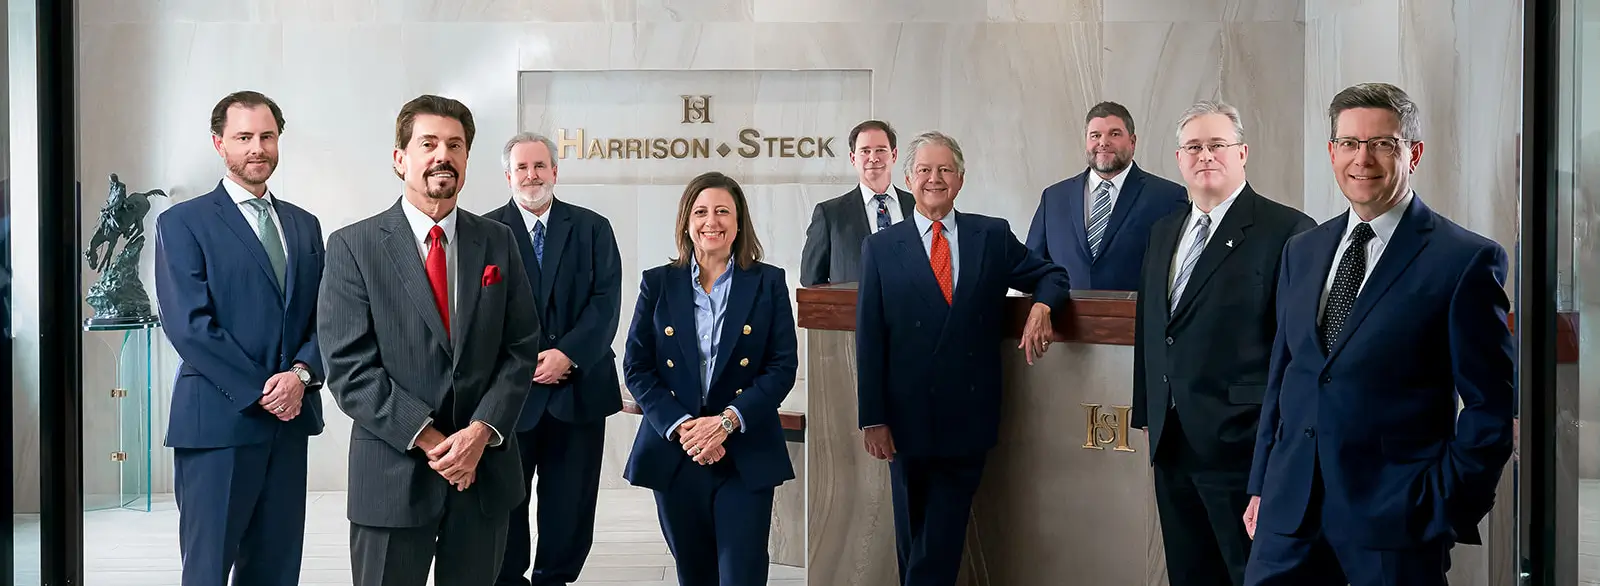 Harrison Steck, P.C. Construction Law | Attorney Profiles